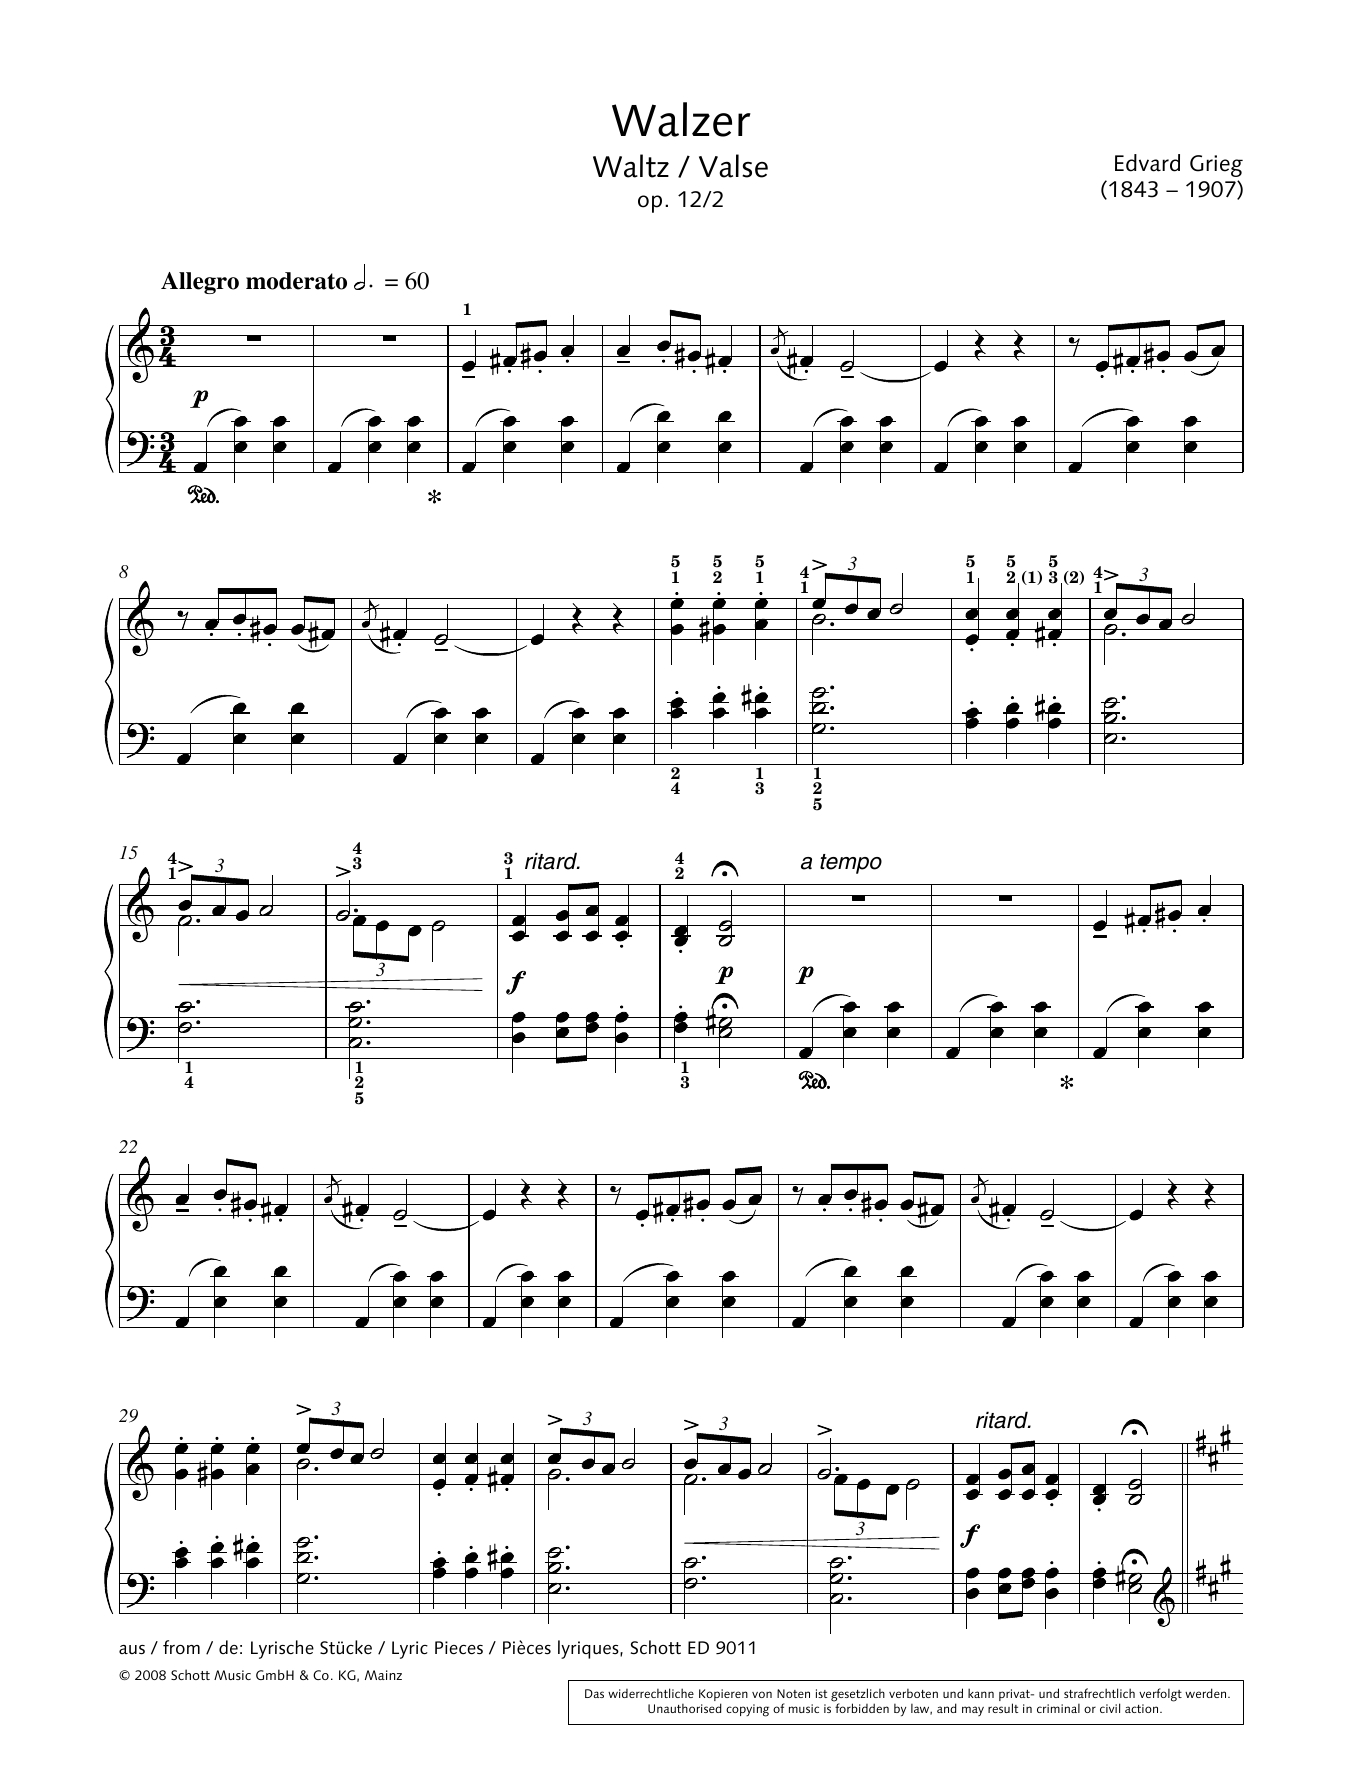 Hans-Gunter Heumann Waltz Sheet Music Notes & Chords for Piano Solo - Download or Print PDF